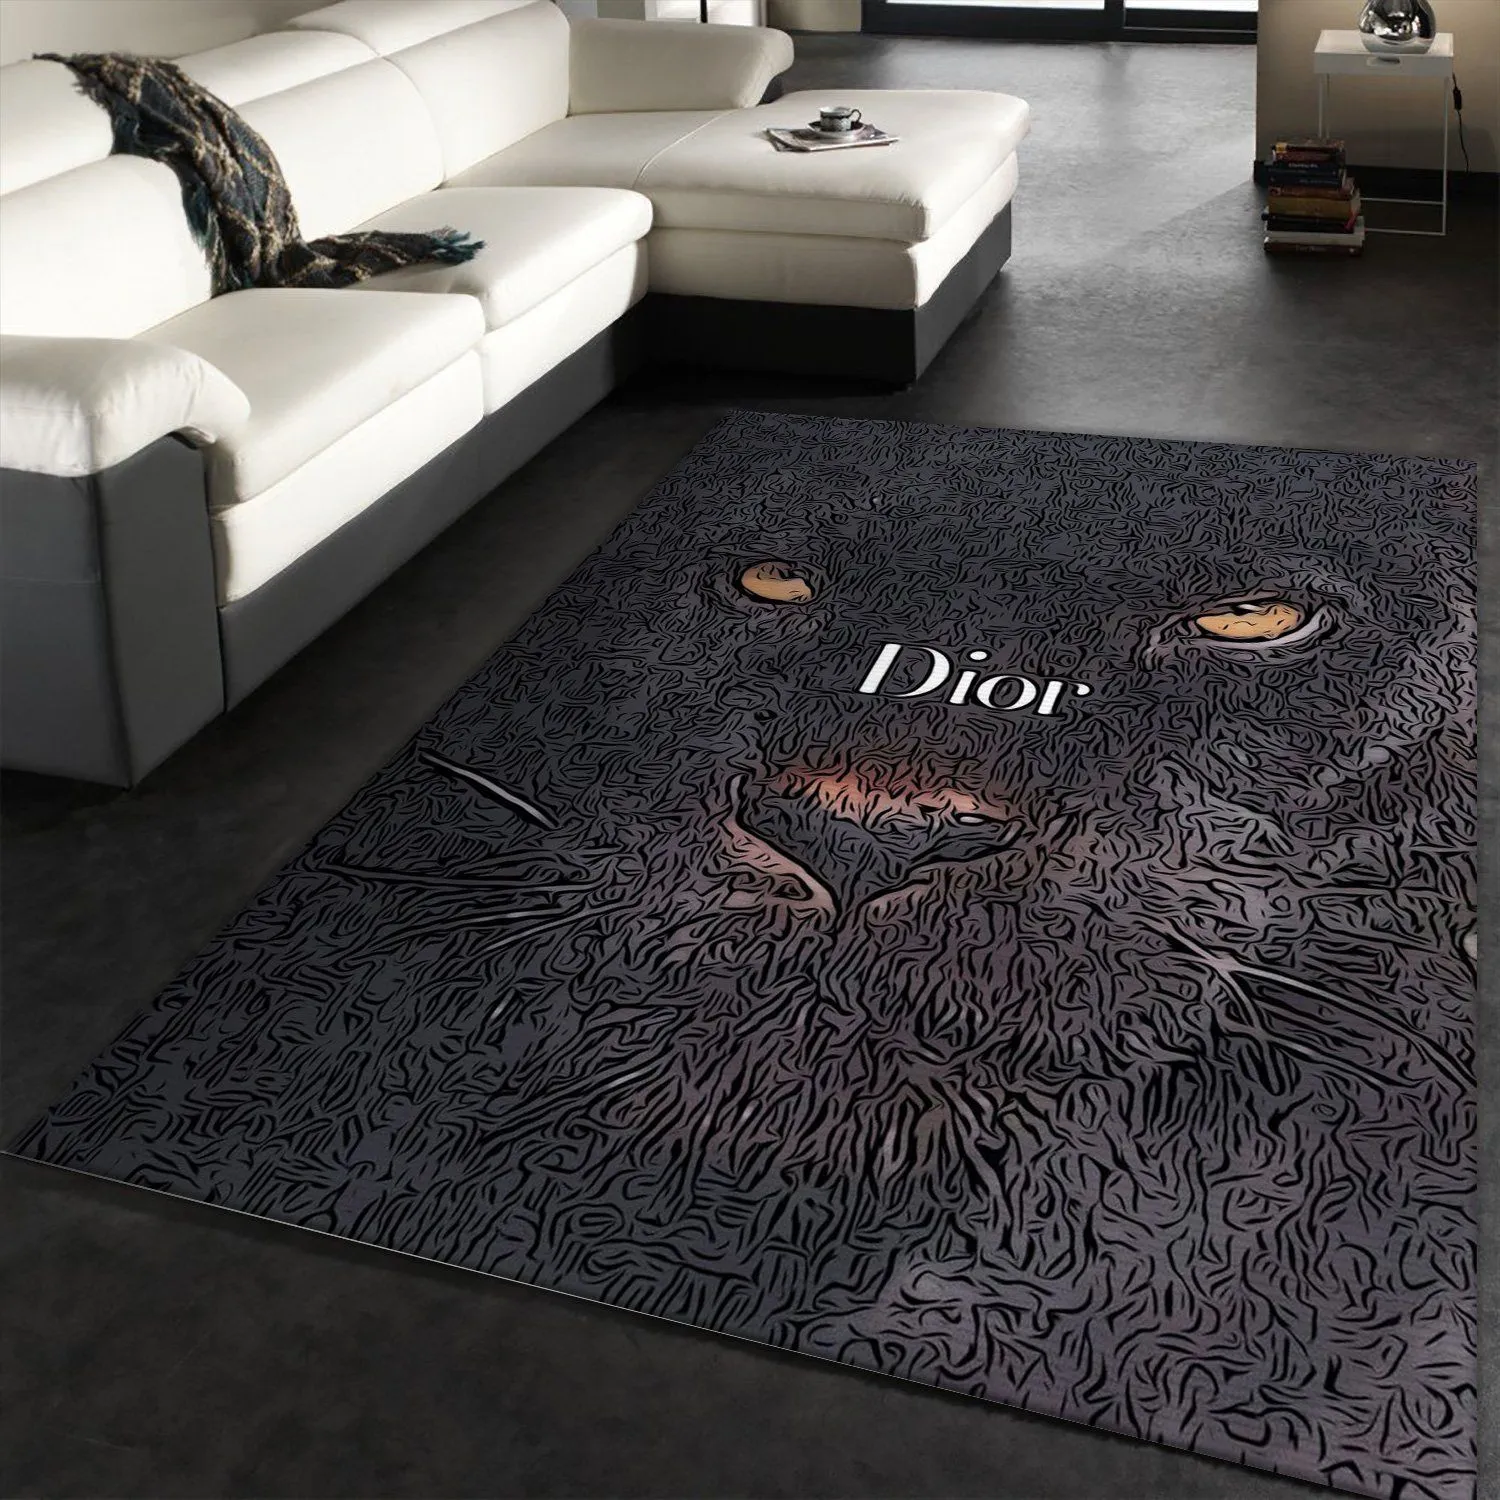 Dior Rectangle Rug Door Mat Luxury Area Carpet Home Decor Fashion Brand